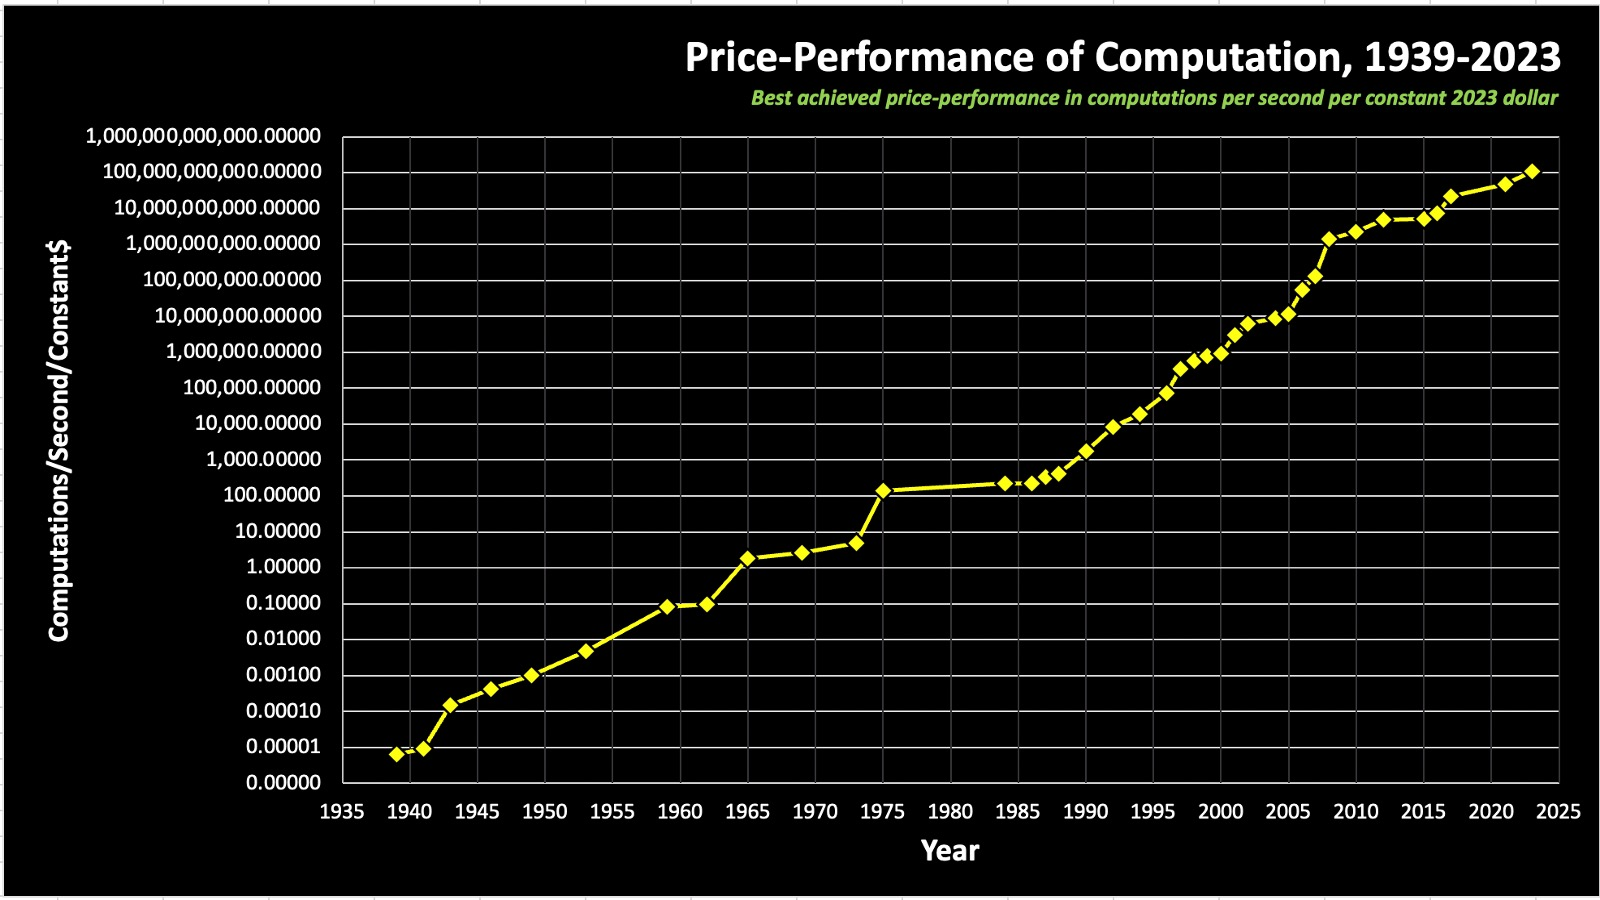 Ray: 이것이 제 메인 그래프입니다. 이것은 단지 현재에 관한 것이 아닙니다. 1931년으로 거슬러 올라갑니다. 이것은 달러당, 상수 달러당 컴퓨터의 파워입니다. 로그 그래프입니다. 그래프를 위로 올라가면 기하급수적으로 확장되고 있습니다. 따라서 이 그래프는 같은 금액으로 처리할 수 있는 연산량이 20조 배 증가했음을 나타냅니다.